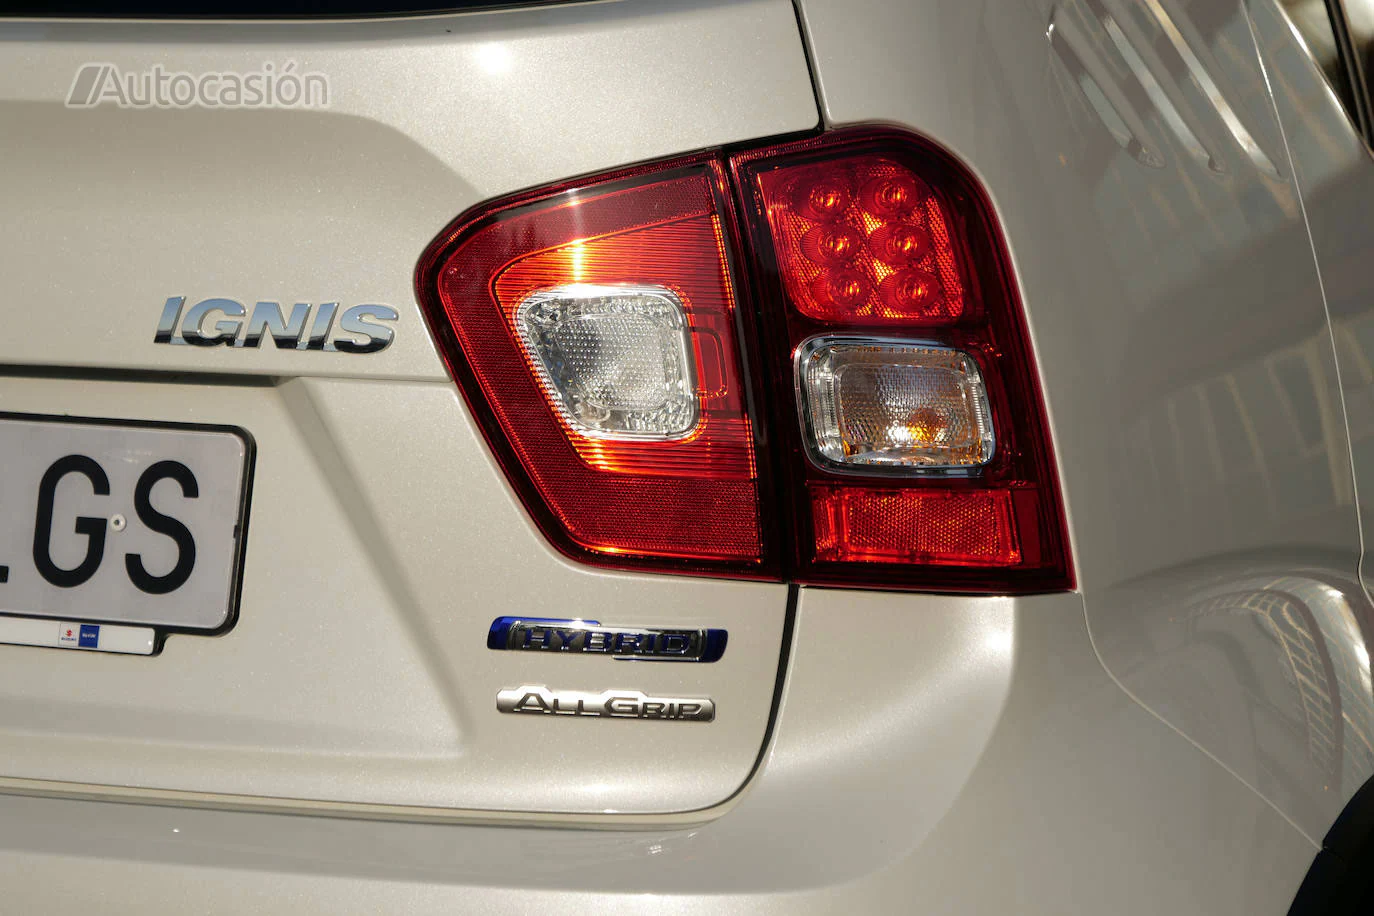 Fotos: Fotogalería: Suzuki Ignis Mild Hybrid